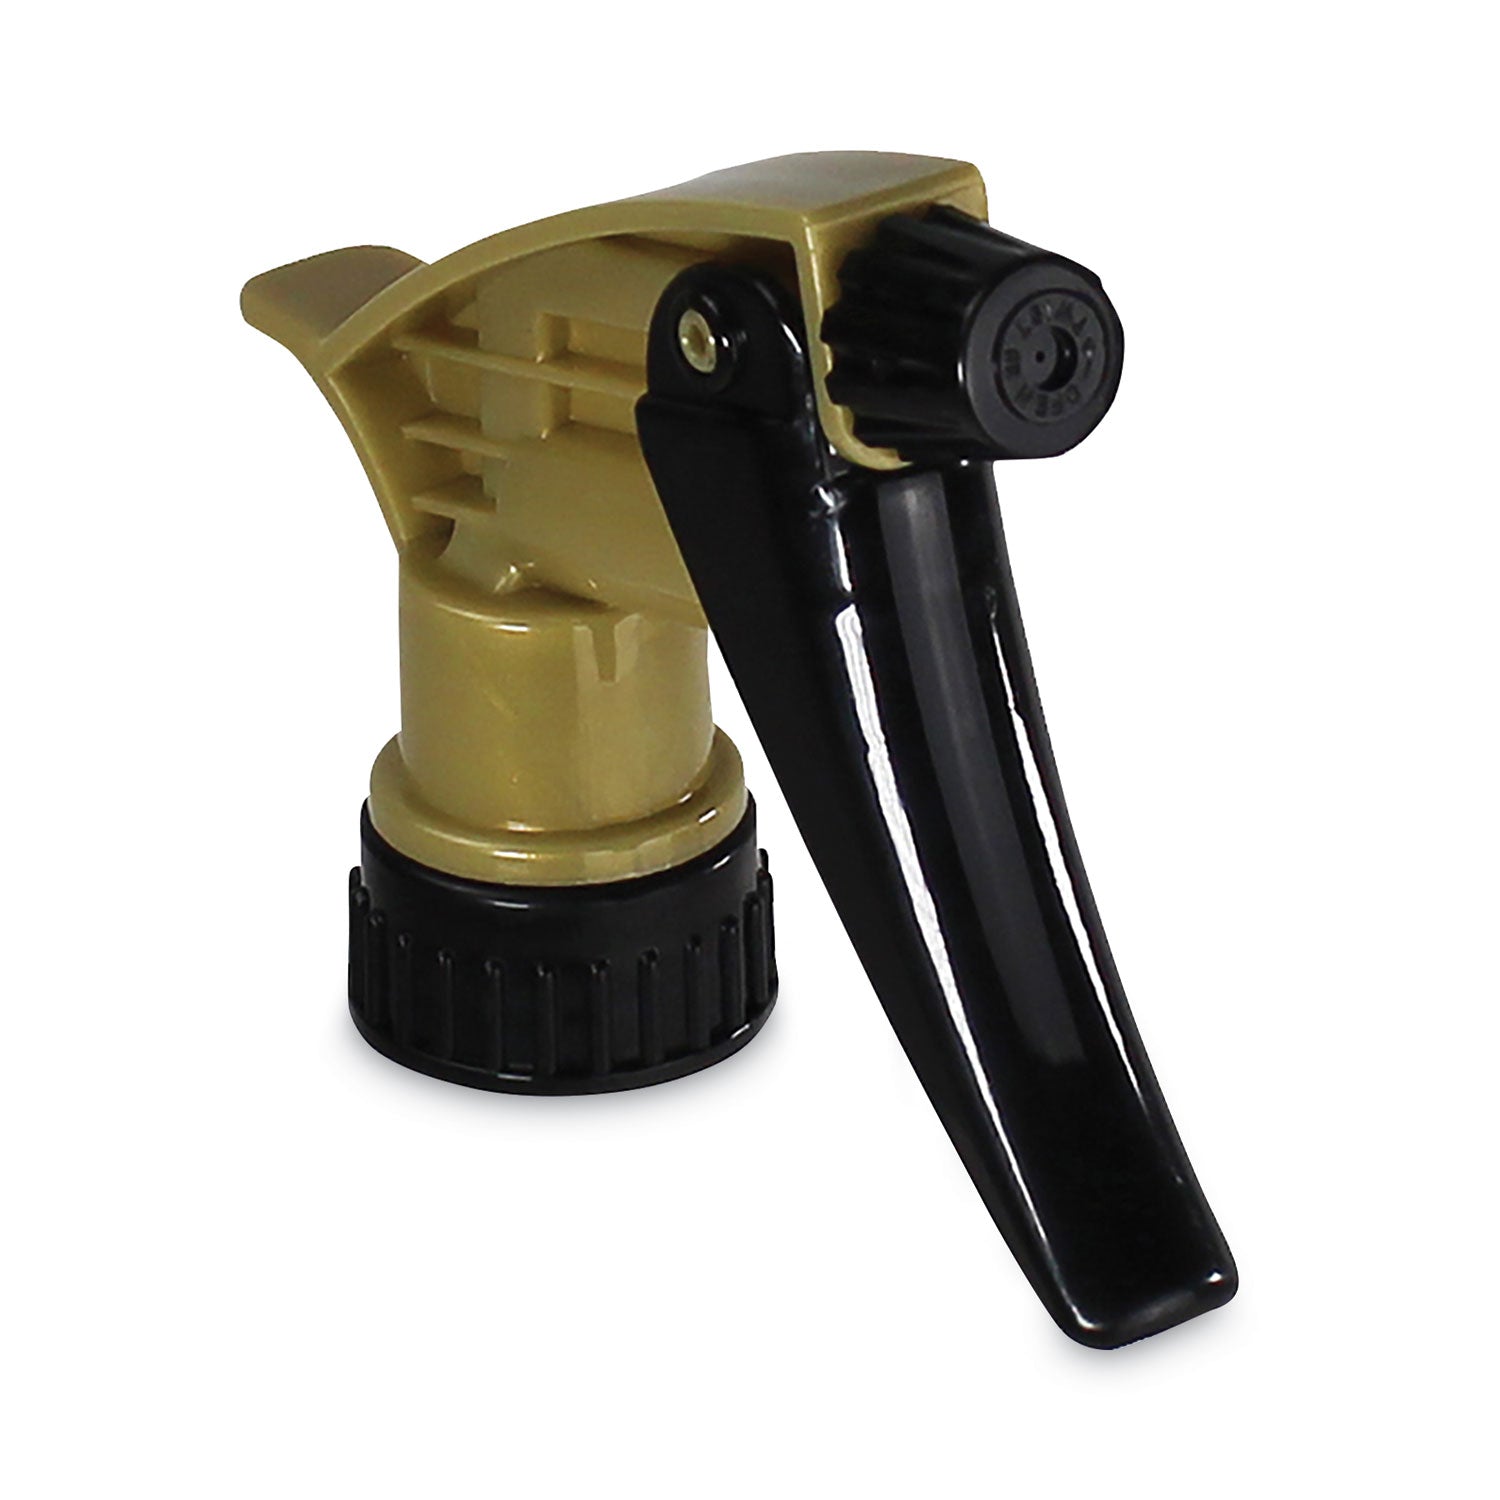 320ars-acid-resistant-trigger-sprayer-95-tube-fits-32-oz-bottle-with-28-400-neck-thread-gold-black-200-carton_toc110580 - 3